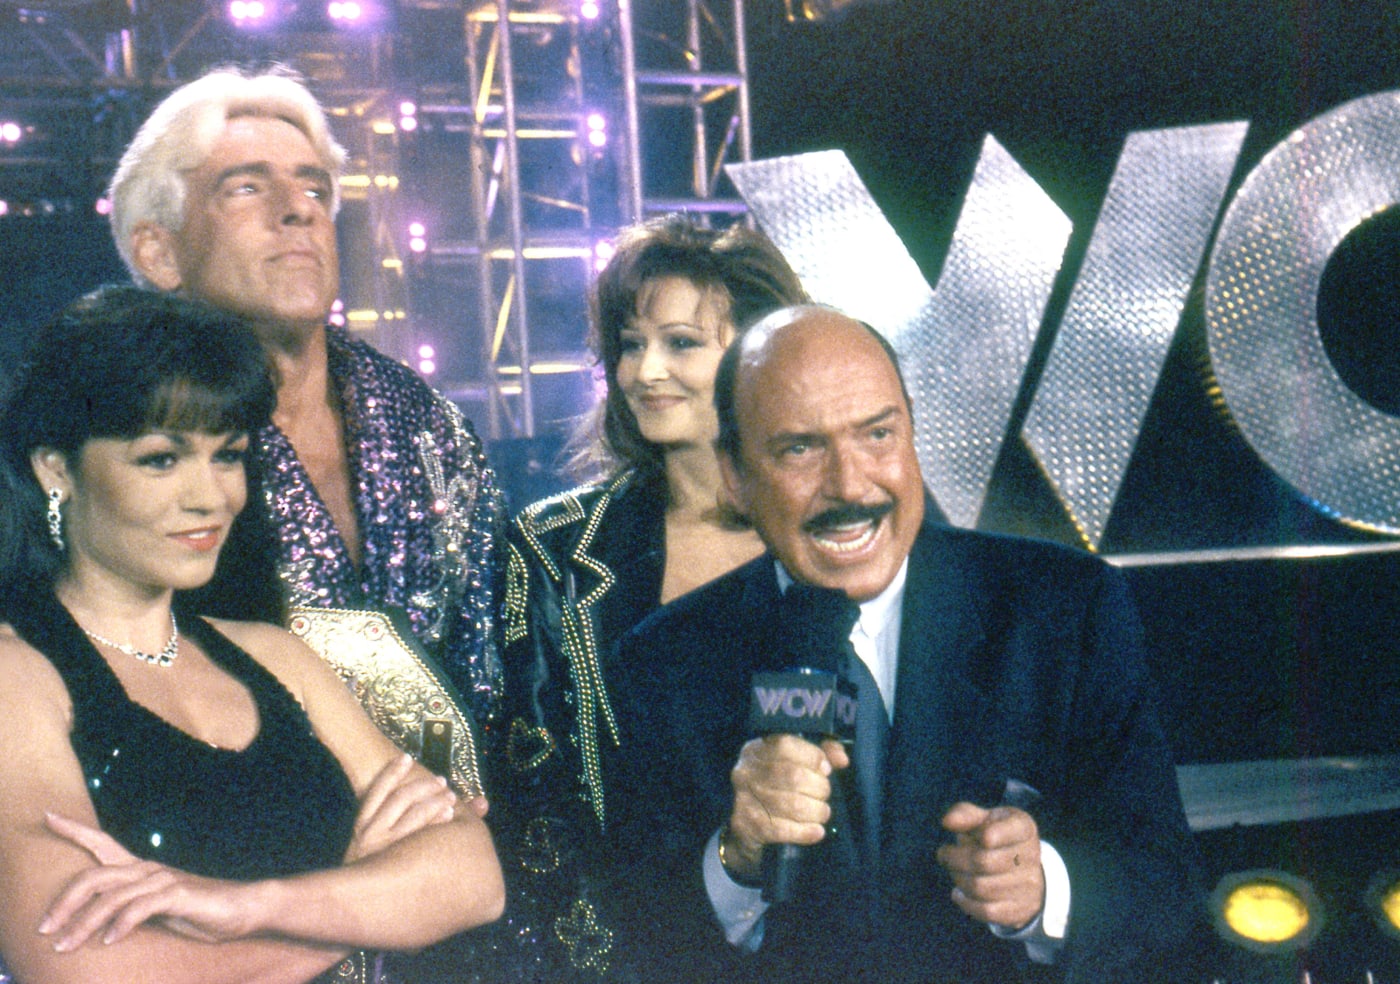 Woman, Ric Flair, Miss Elizabeth and Gene Okerlund circa 1998 during a WCW broadcast.